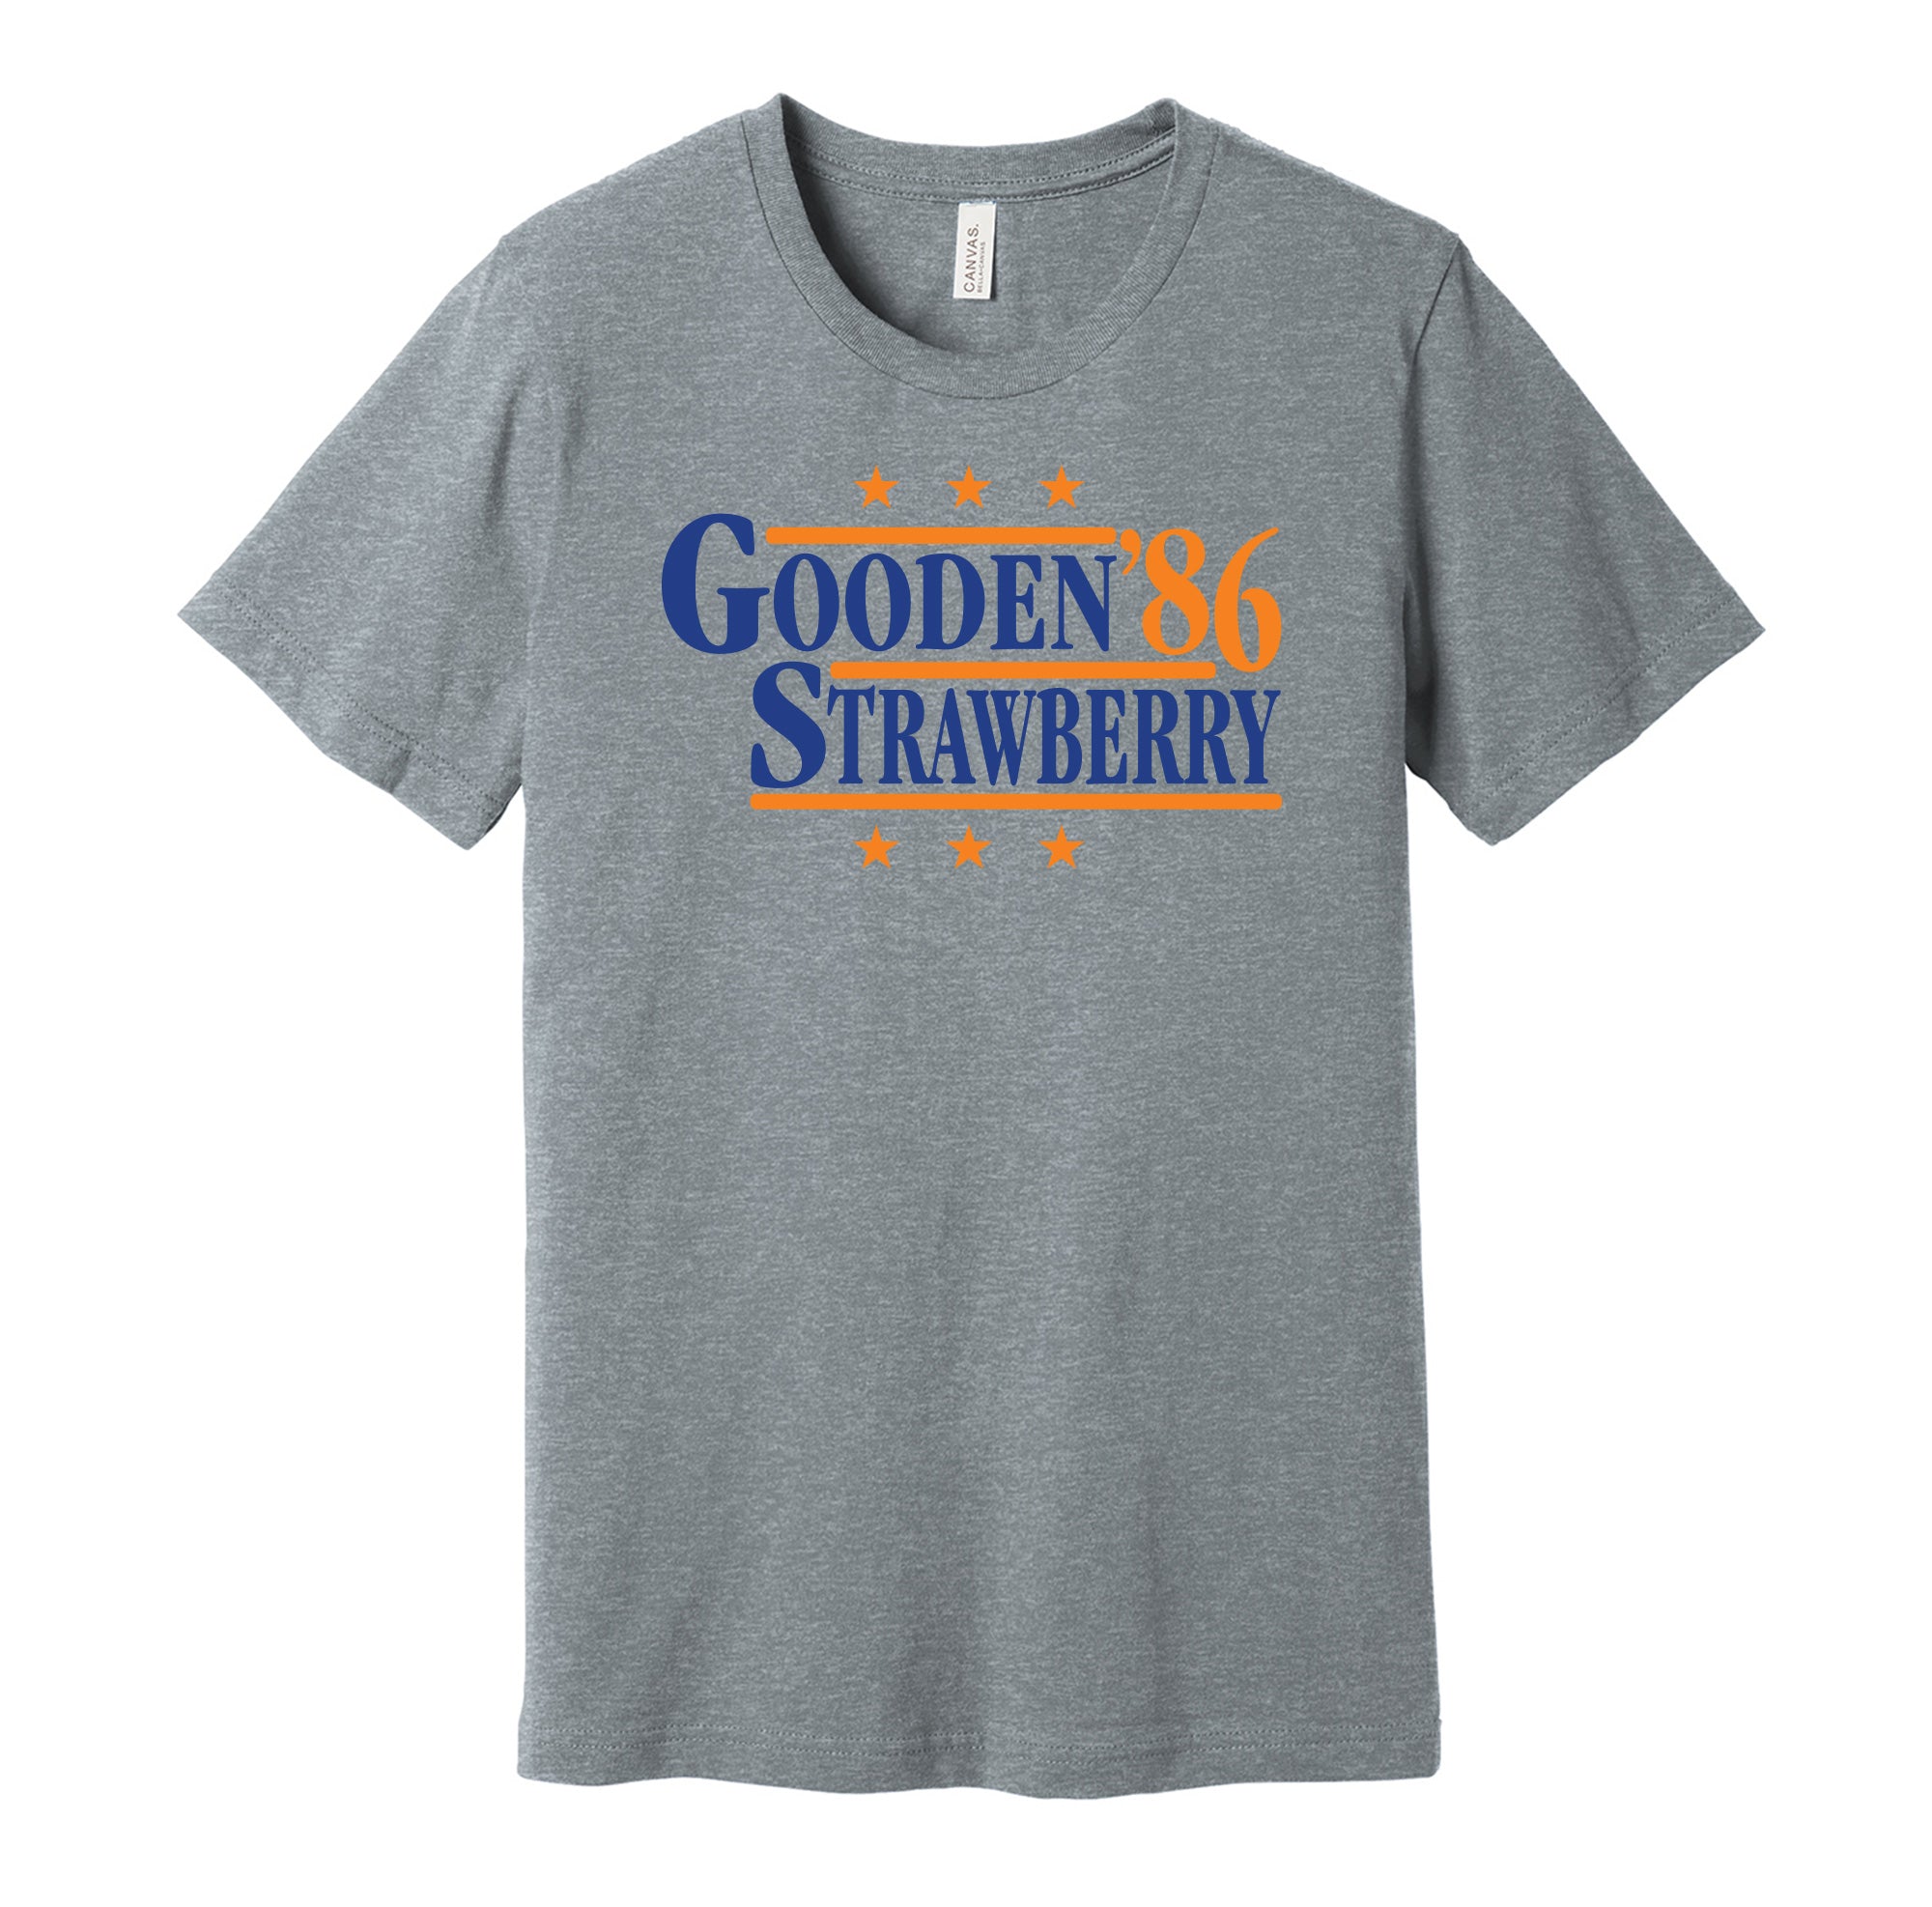 Gooden & Strawberry '86 - New York Baseball Legends Political Campaign Parody T-Shirt - Hyper Than Hype Shirts L / Grey Shirt